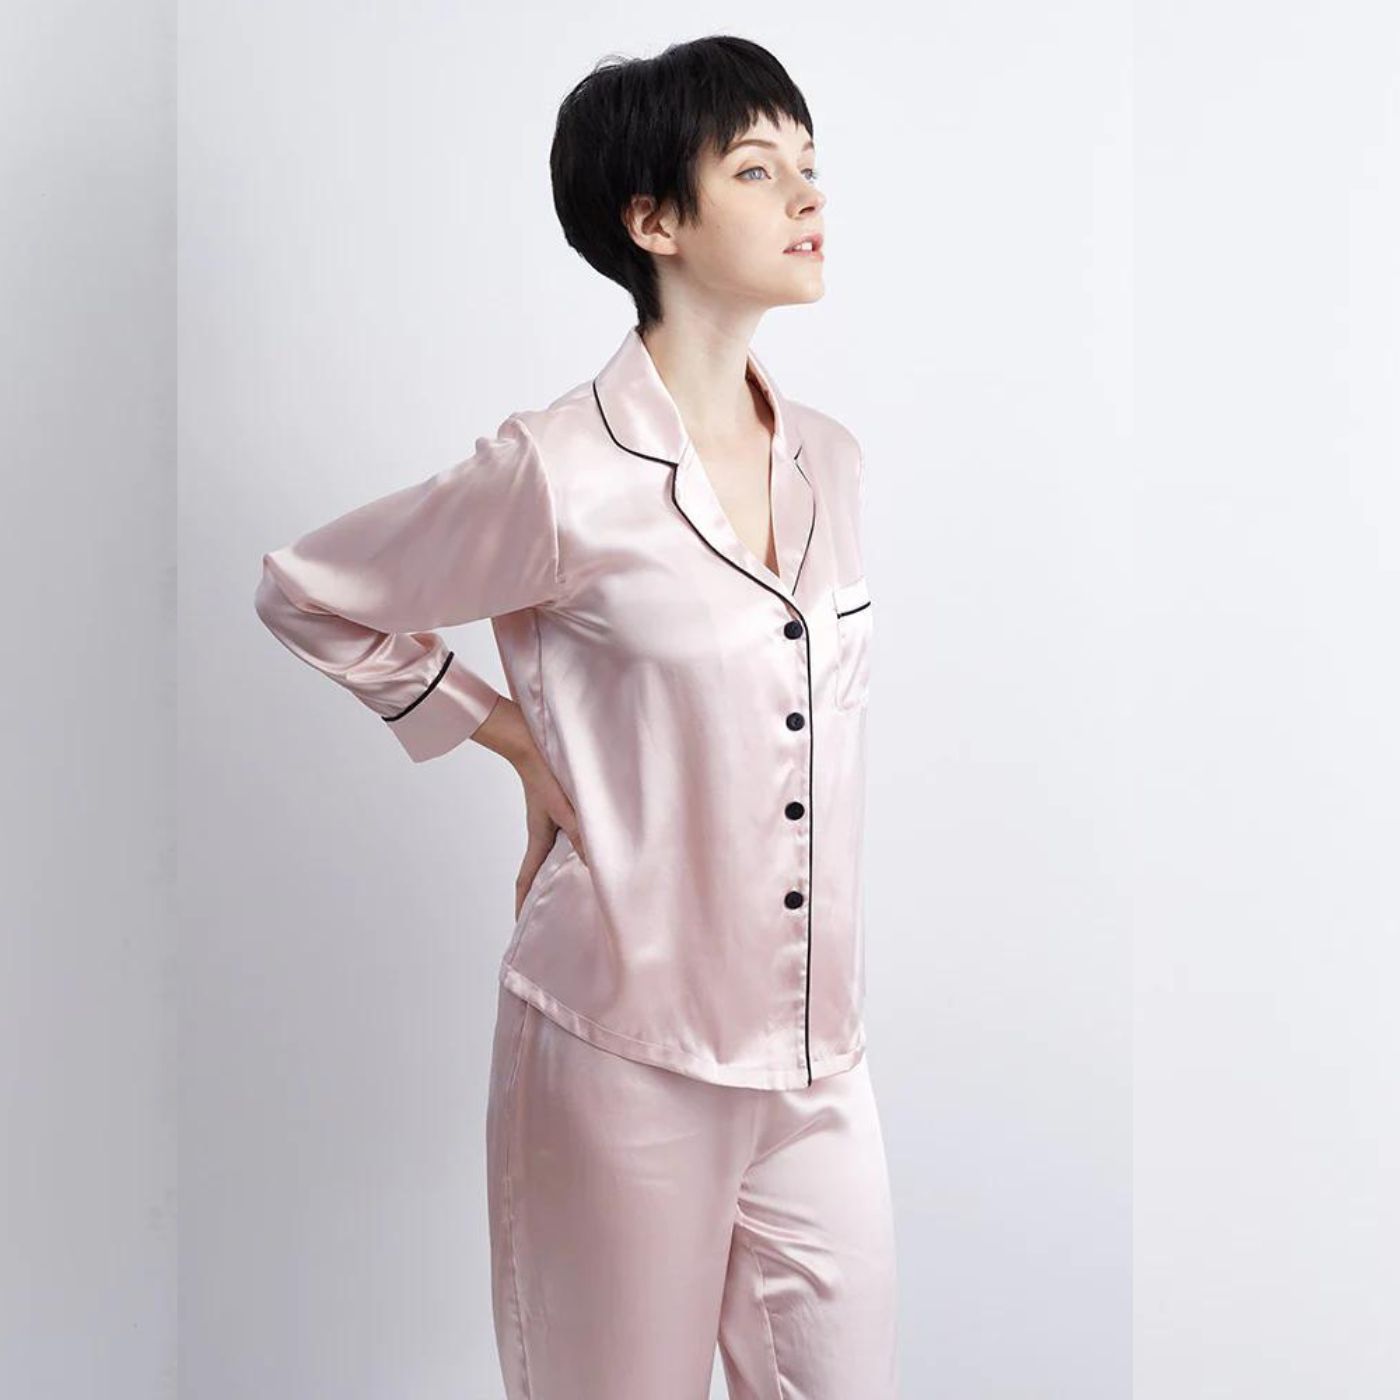 100% Mulberry Silk Real Pure Full Length Pyjamas Pajamas Set trousers shirt two pieces for Women 22 Momme MM Luxury nightwear sleepwear ladies light pink